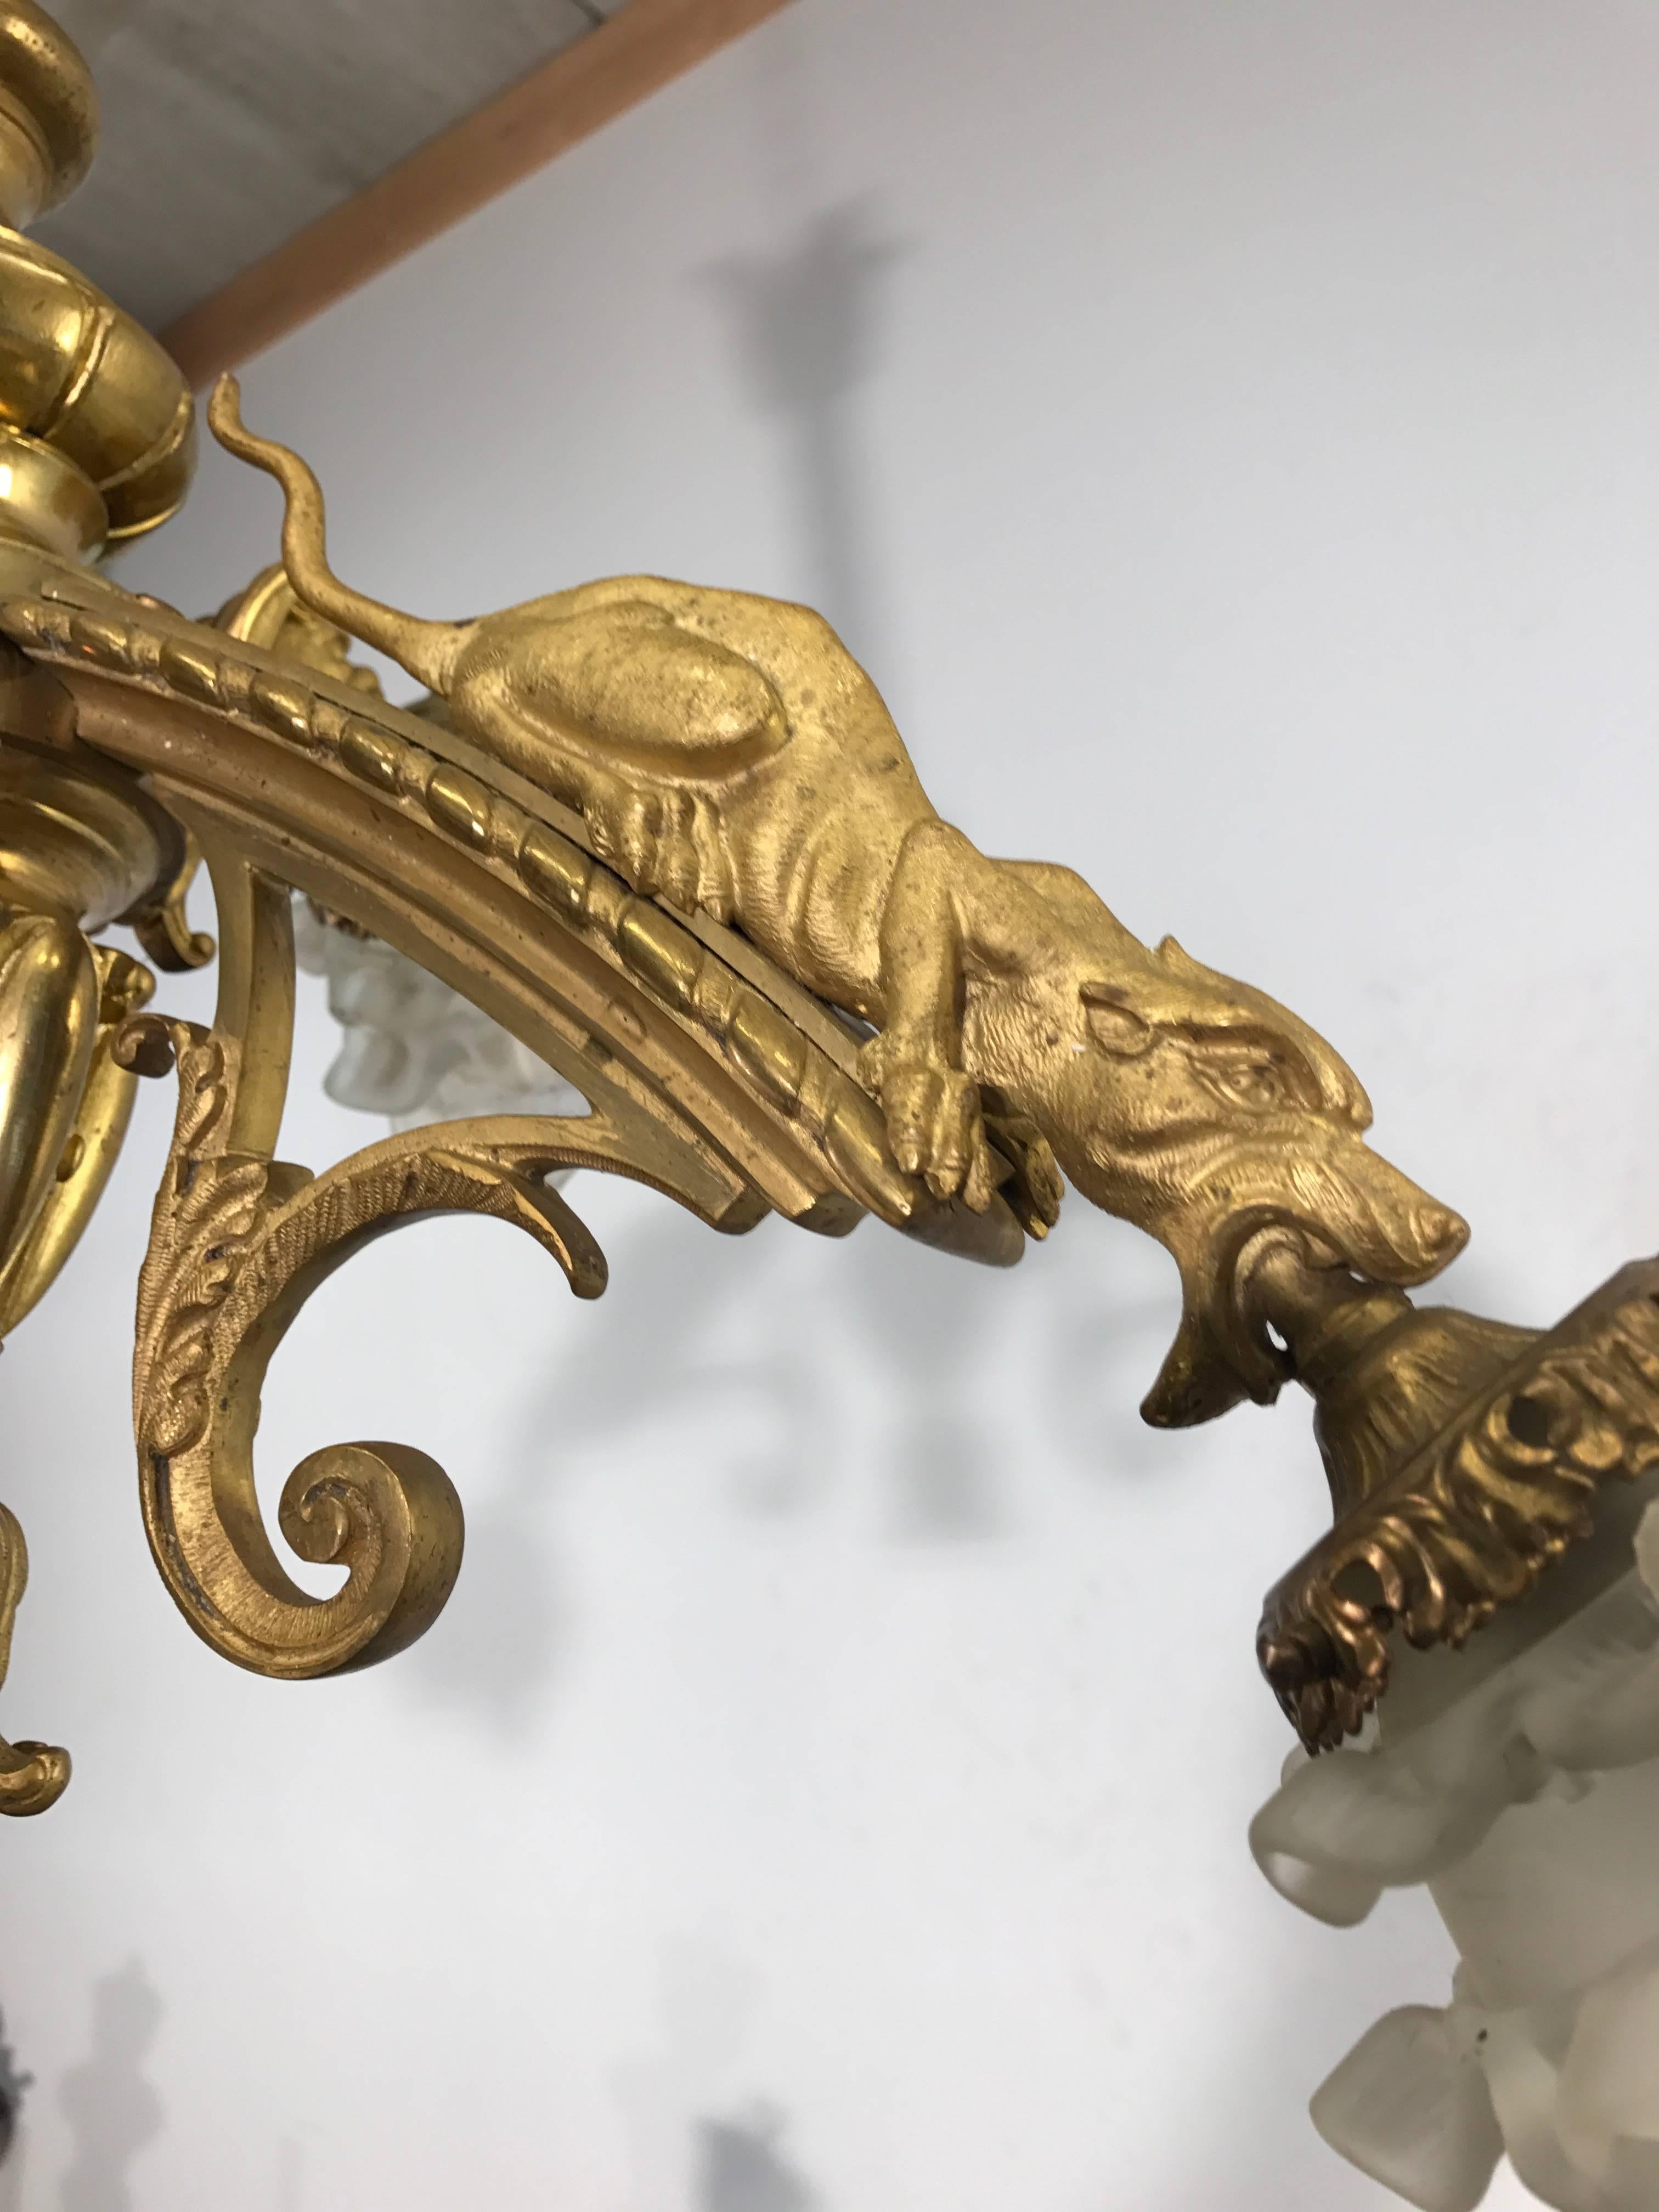 Antique Gothic Revival Fire Gilt Bronze Chandelier w Rare Mythological Creatures For Sale 2